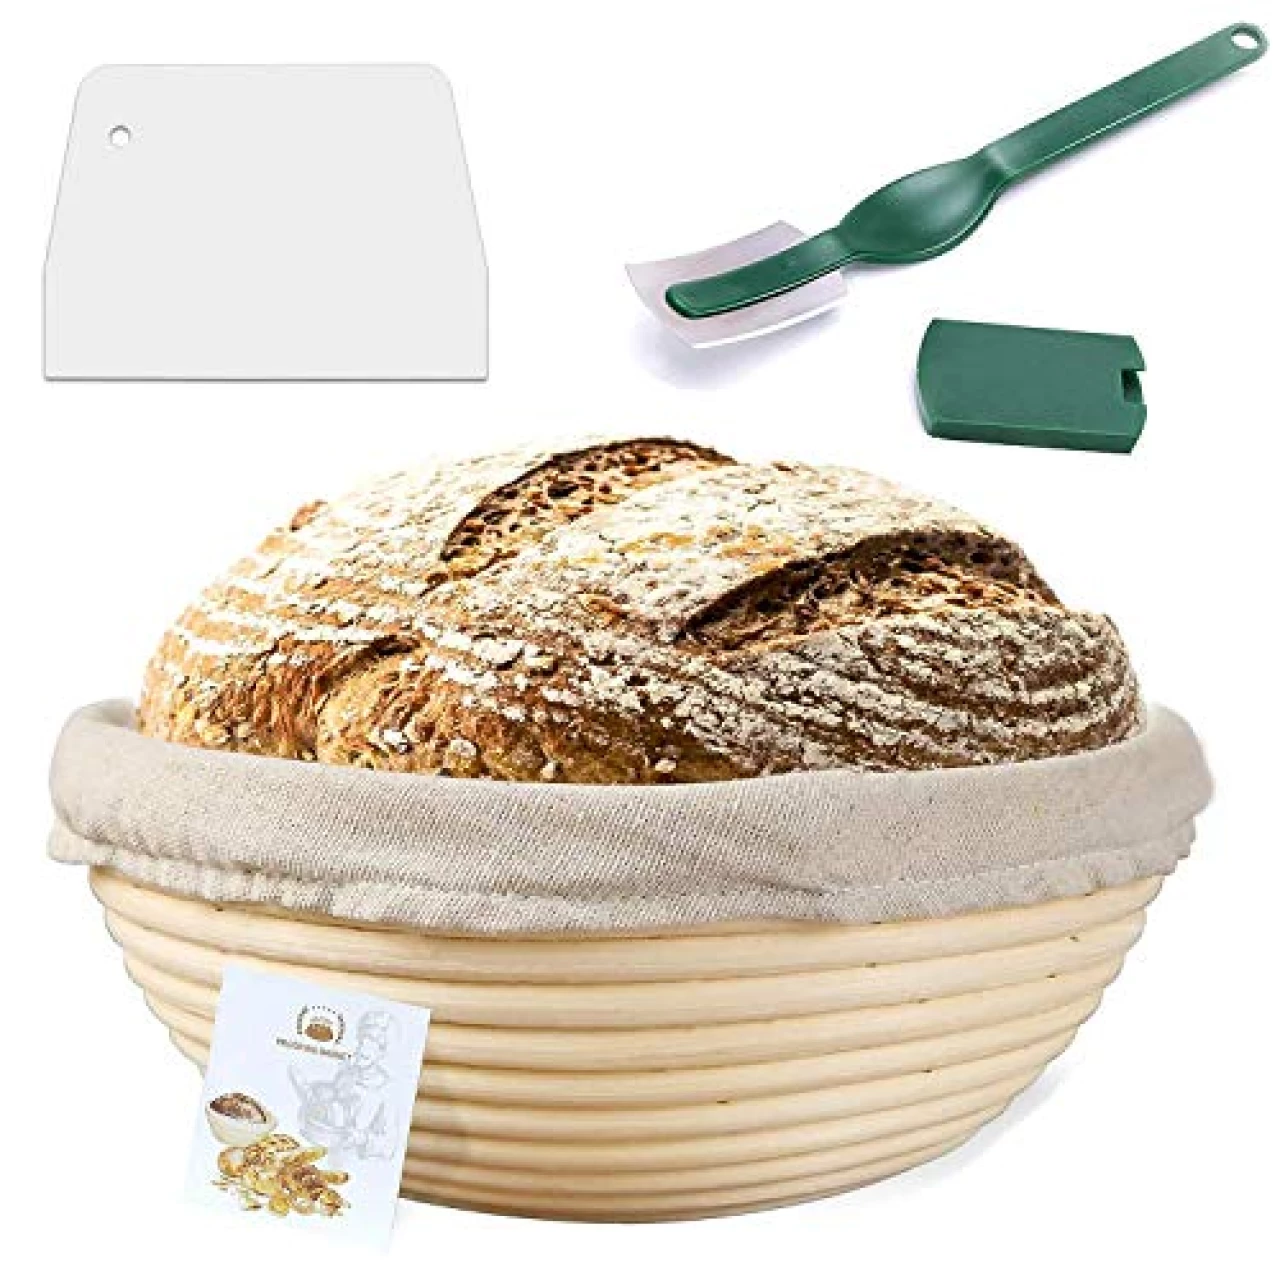 9 Inch Proofing Basket, WERTIOO Banneton Bread Proofing Basket + Bread Lame + Dough Scraper + Linen Liner Cloth